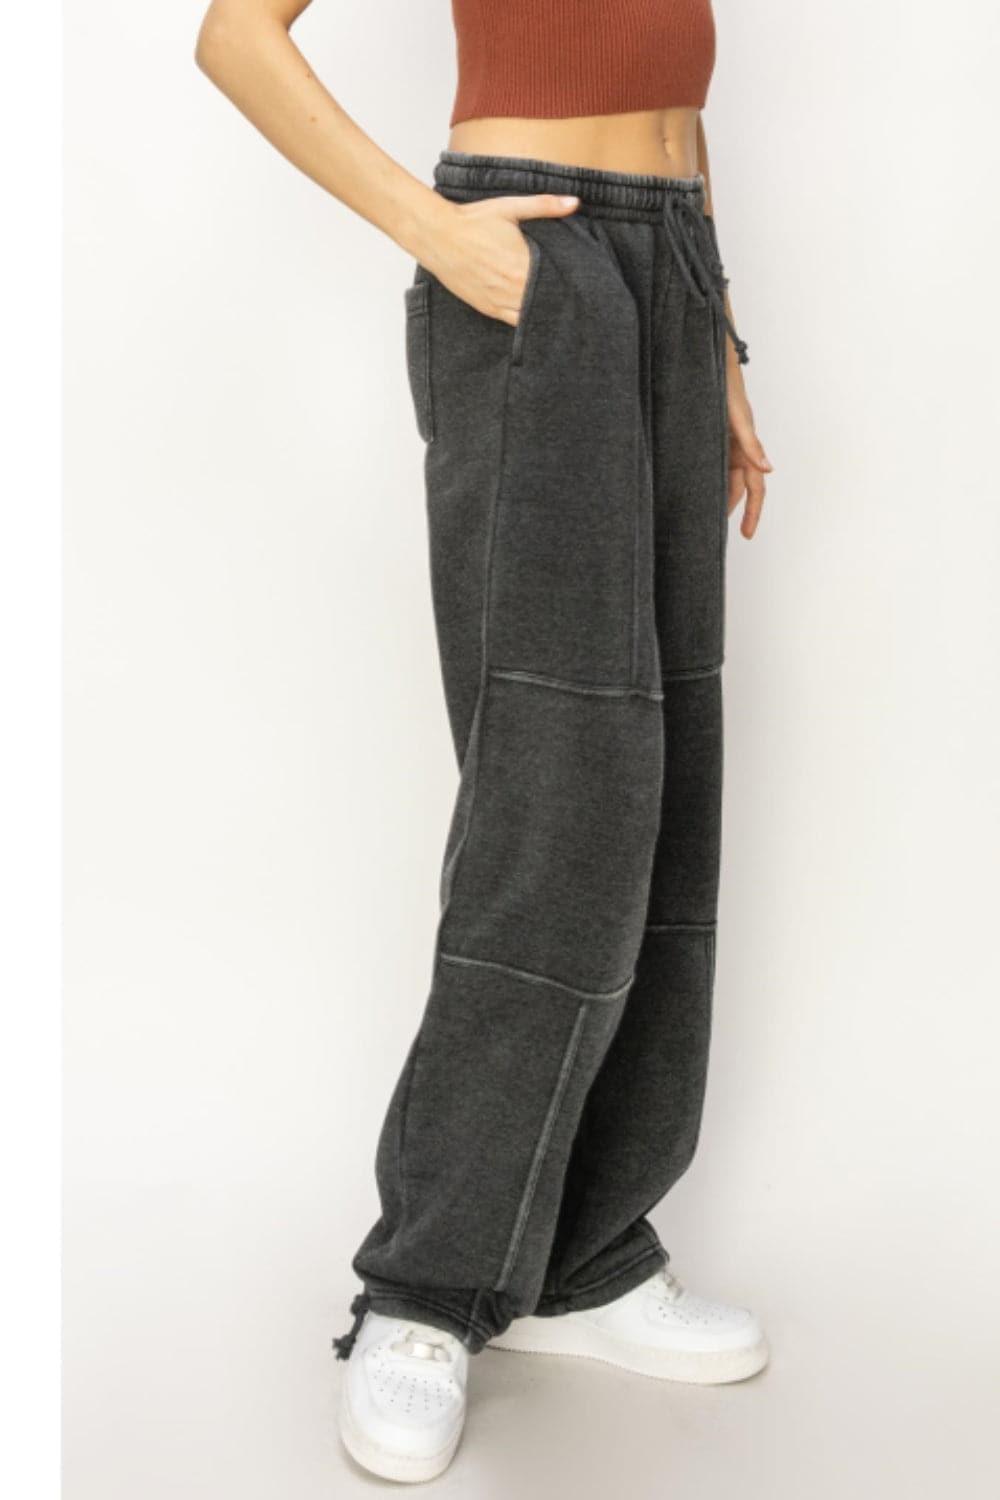 HYFVE Stitched Design Drawstring Sweatpants - SwagglyLife Home & Fashion